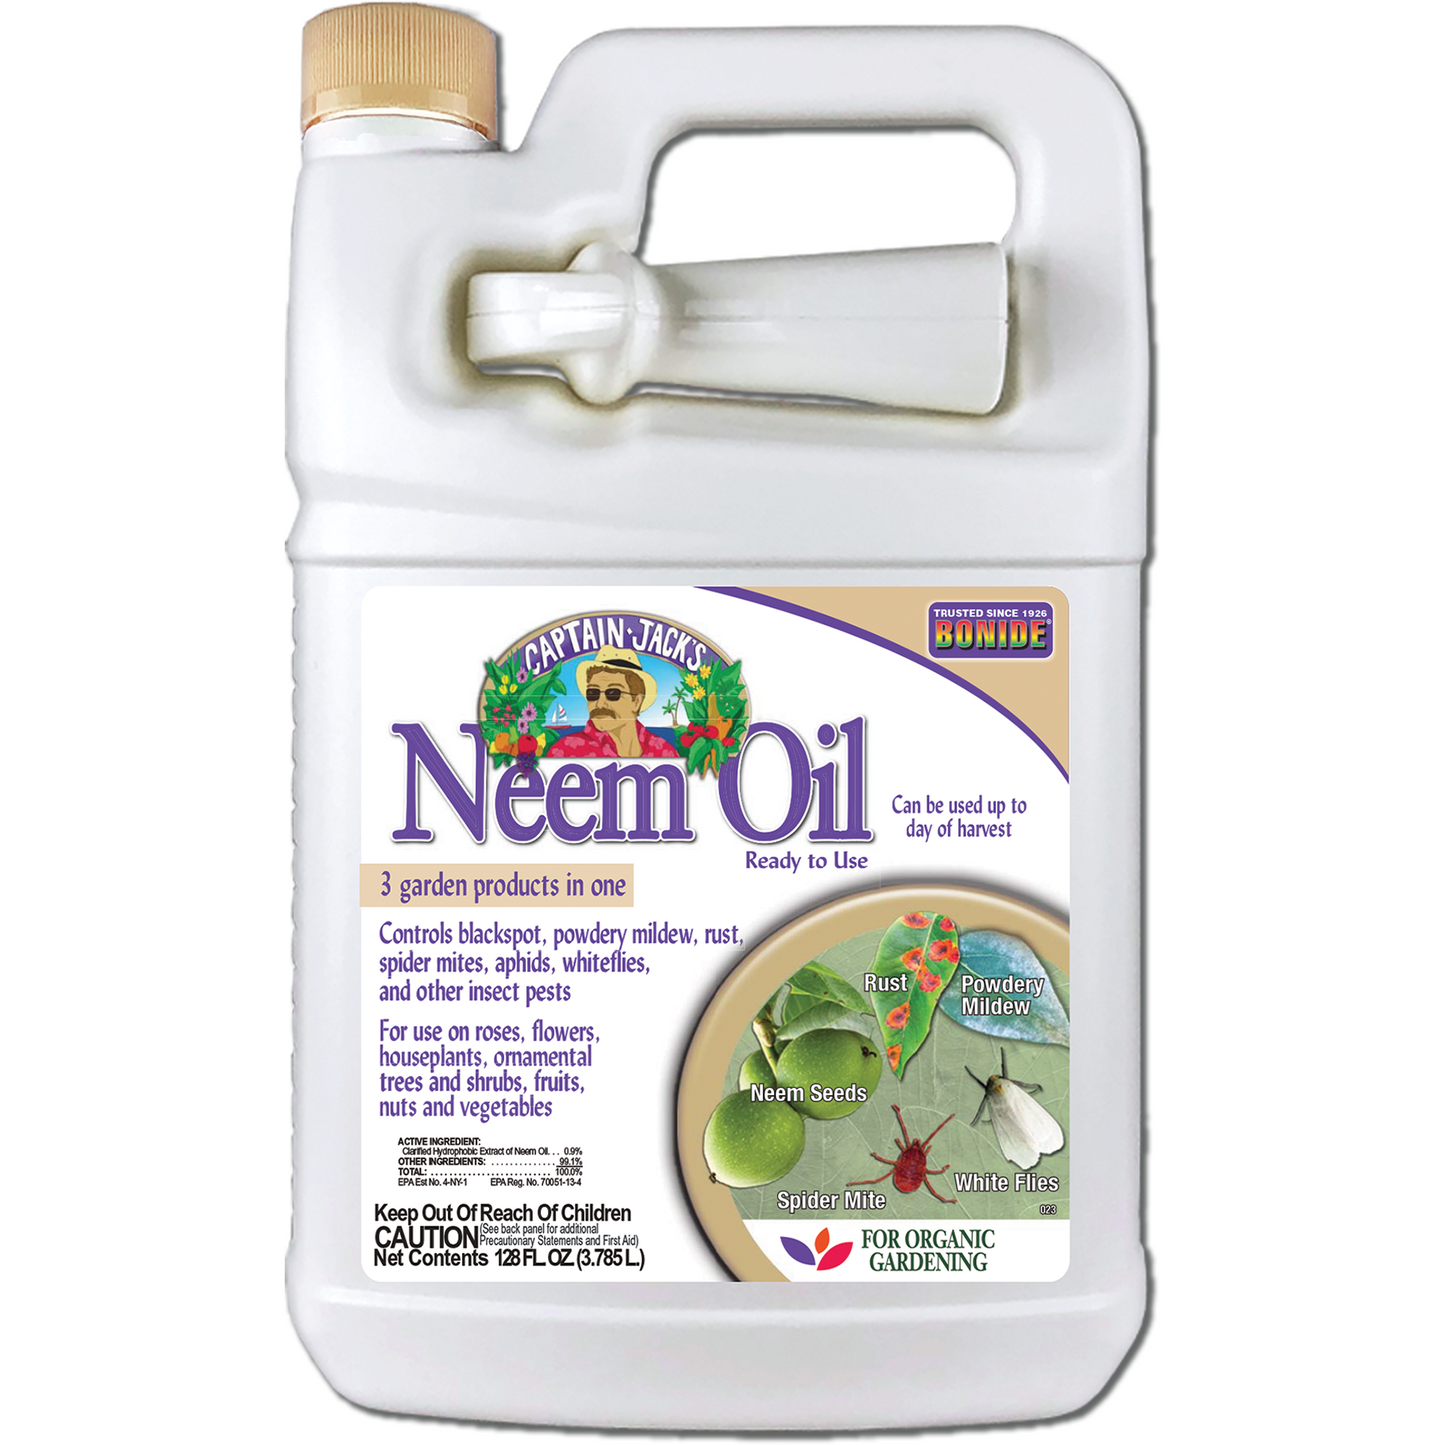 Bonide Neem Oil Insect Control Bonide